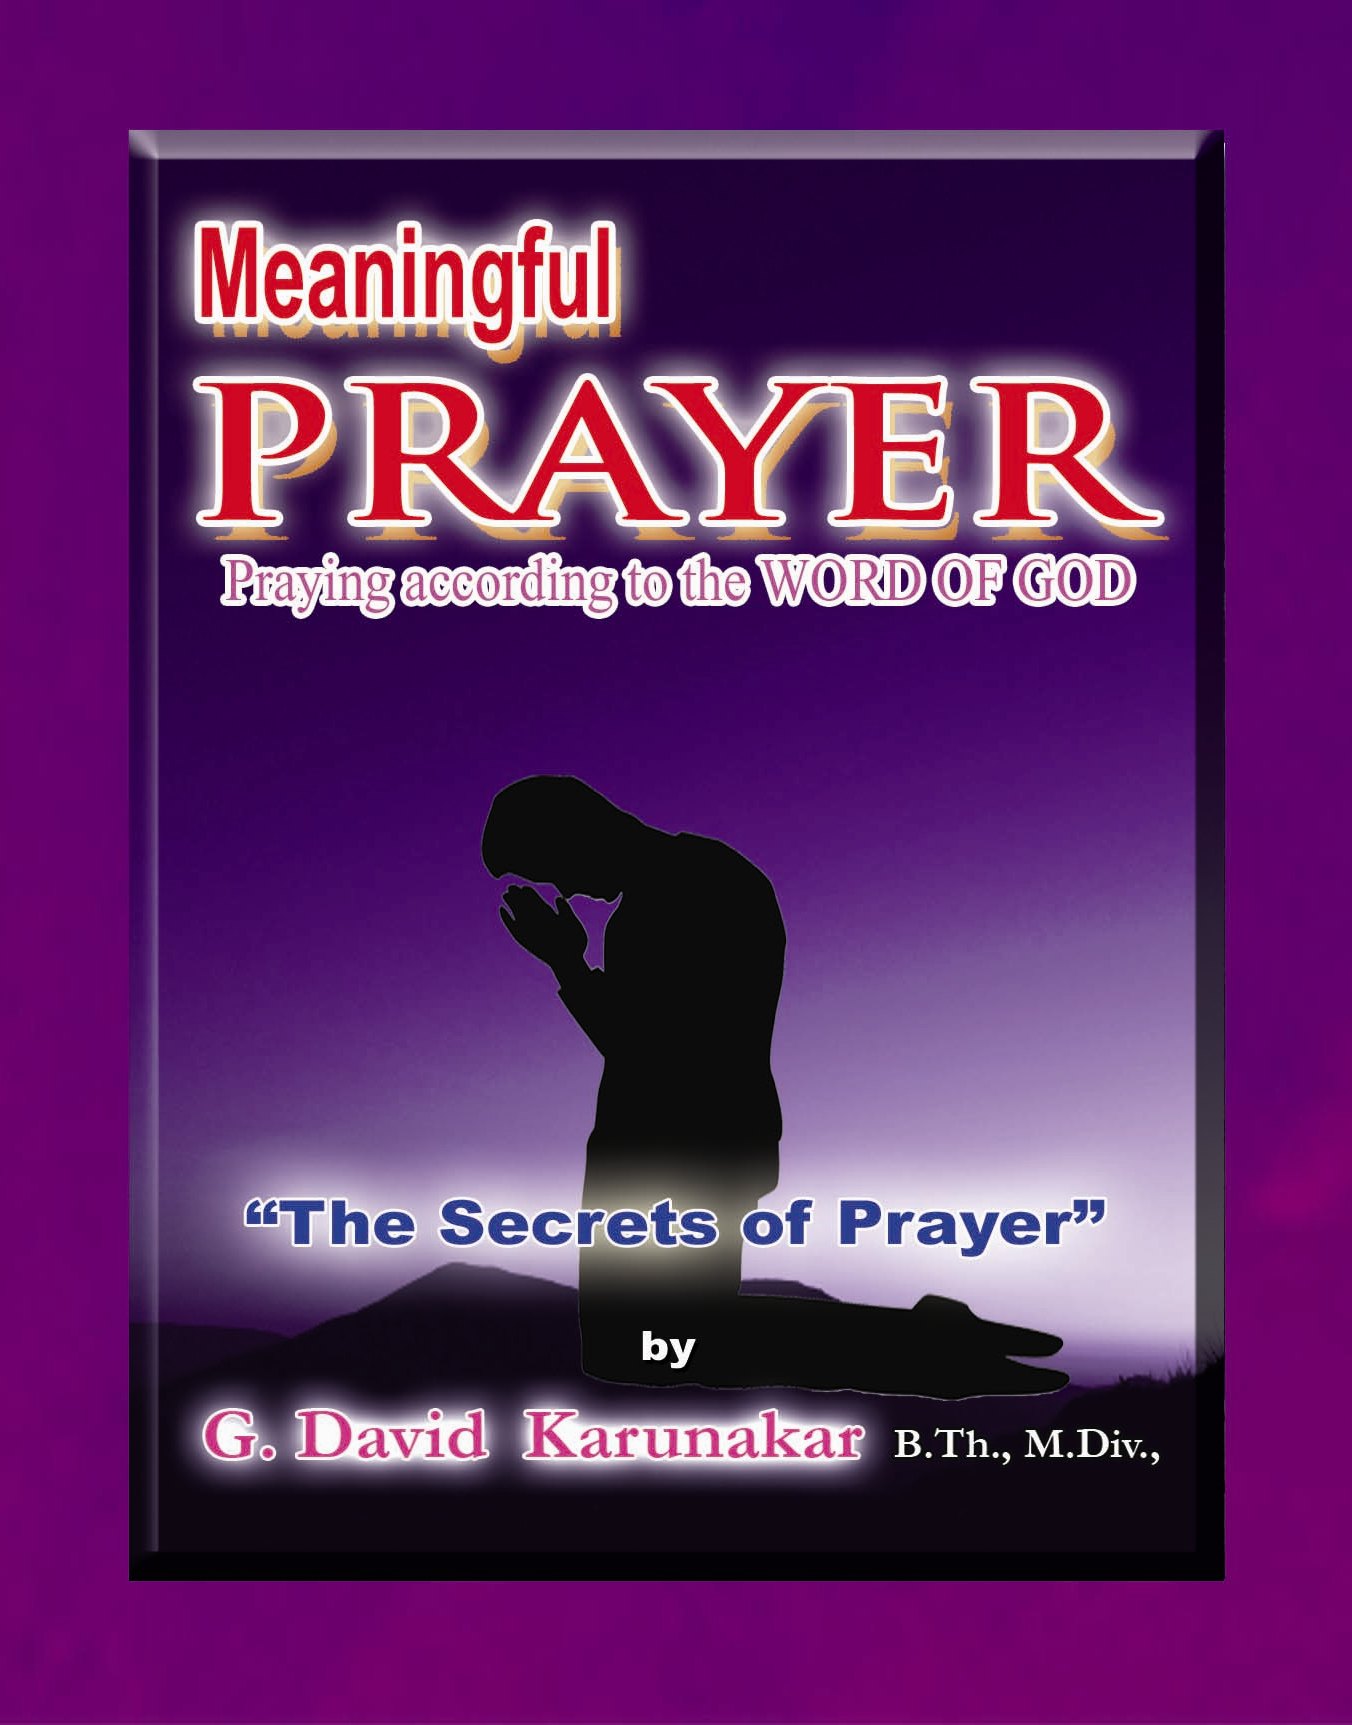 2014-English-Prayer-Book-Cover-copy.jpg - 201.42 kB